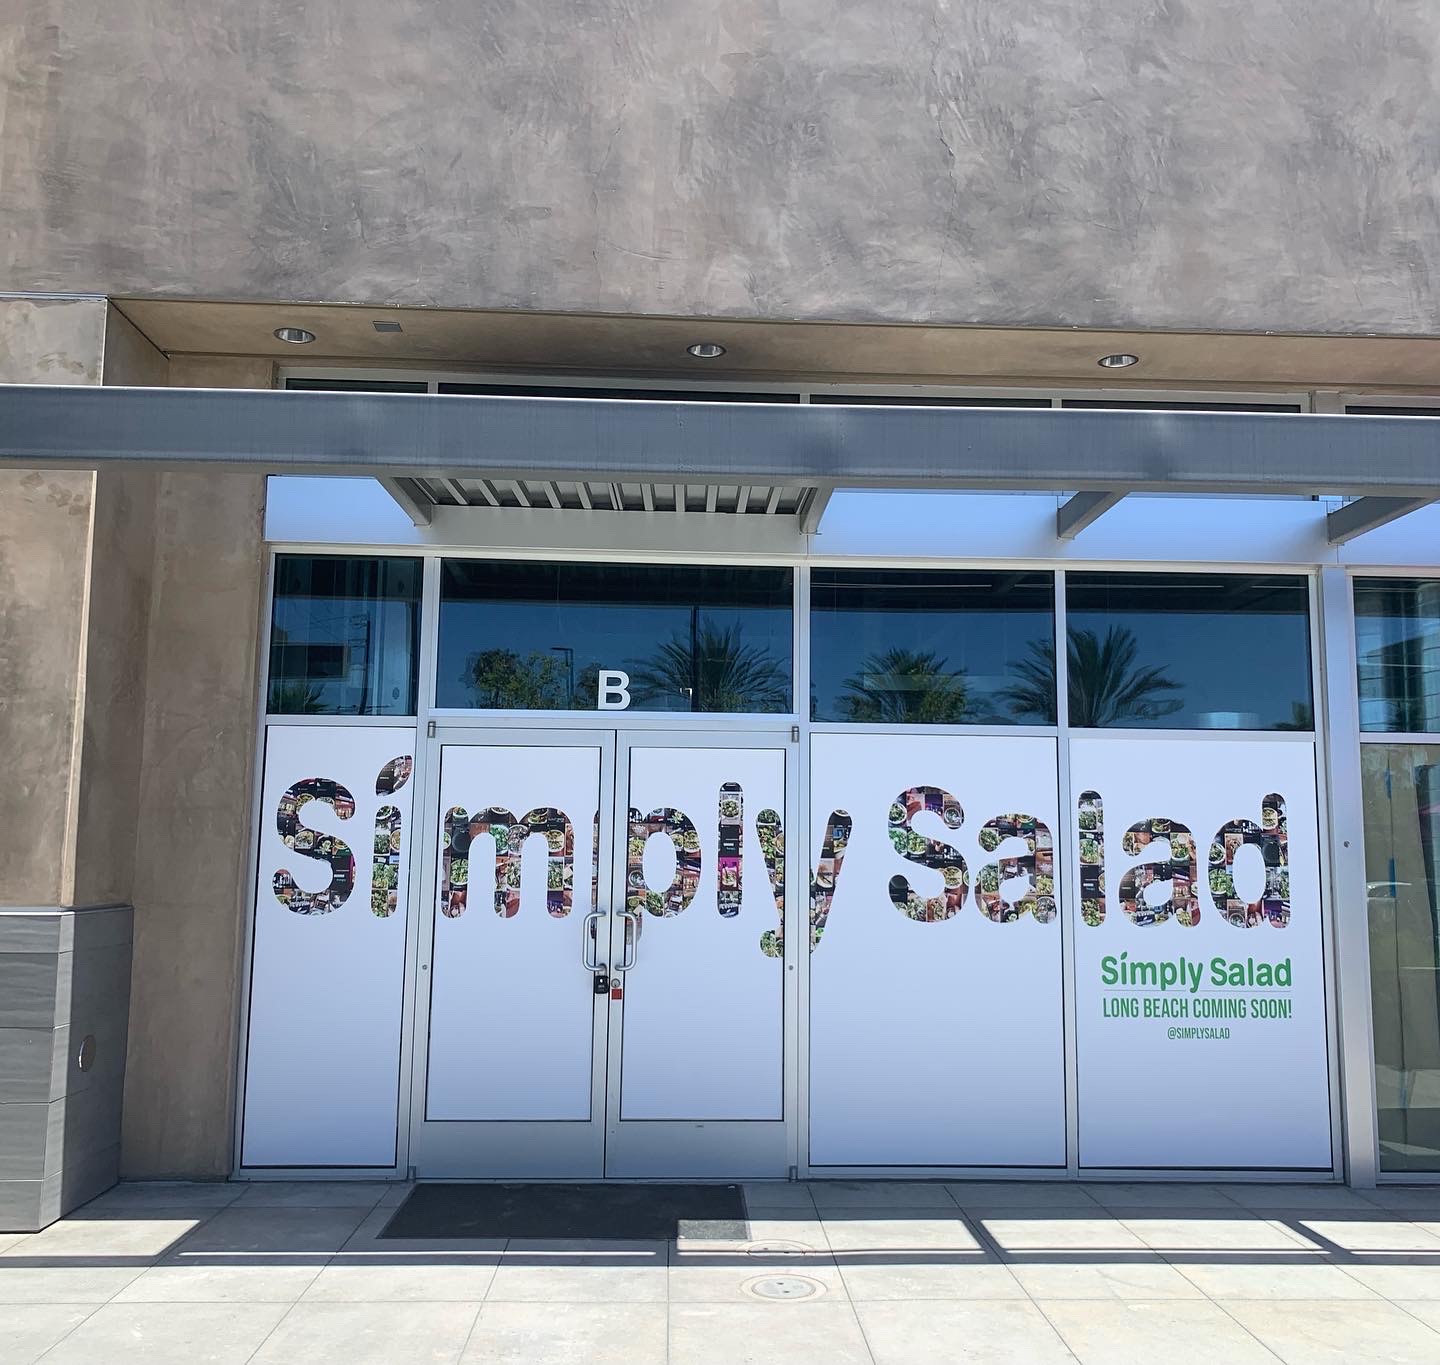 Simply Salad